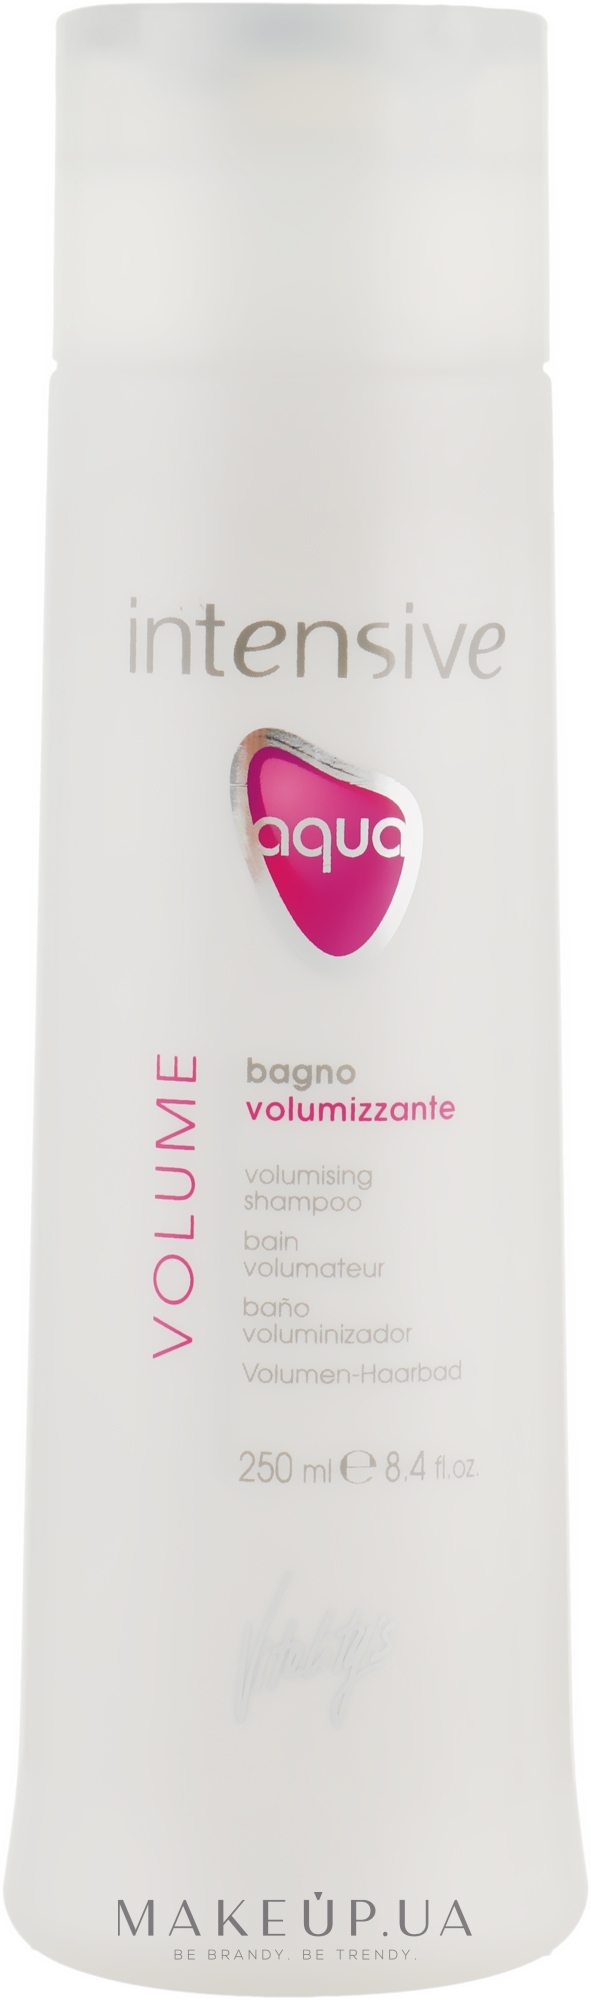 Шампунь для объема волос - Vitality's Intensive Aqua Volumising Shampoo — фото 250ml